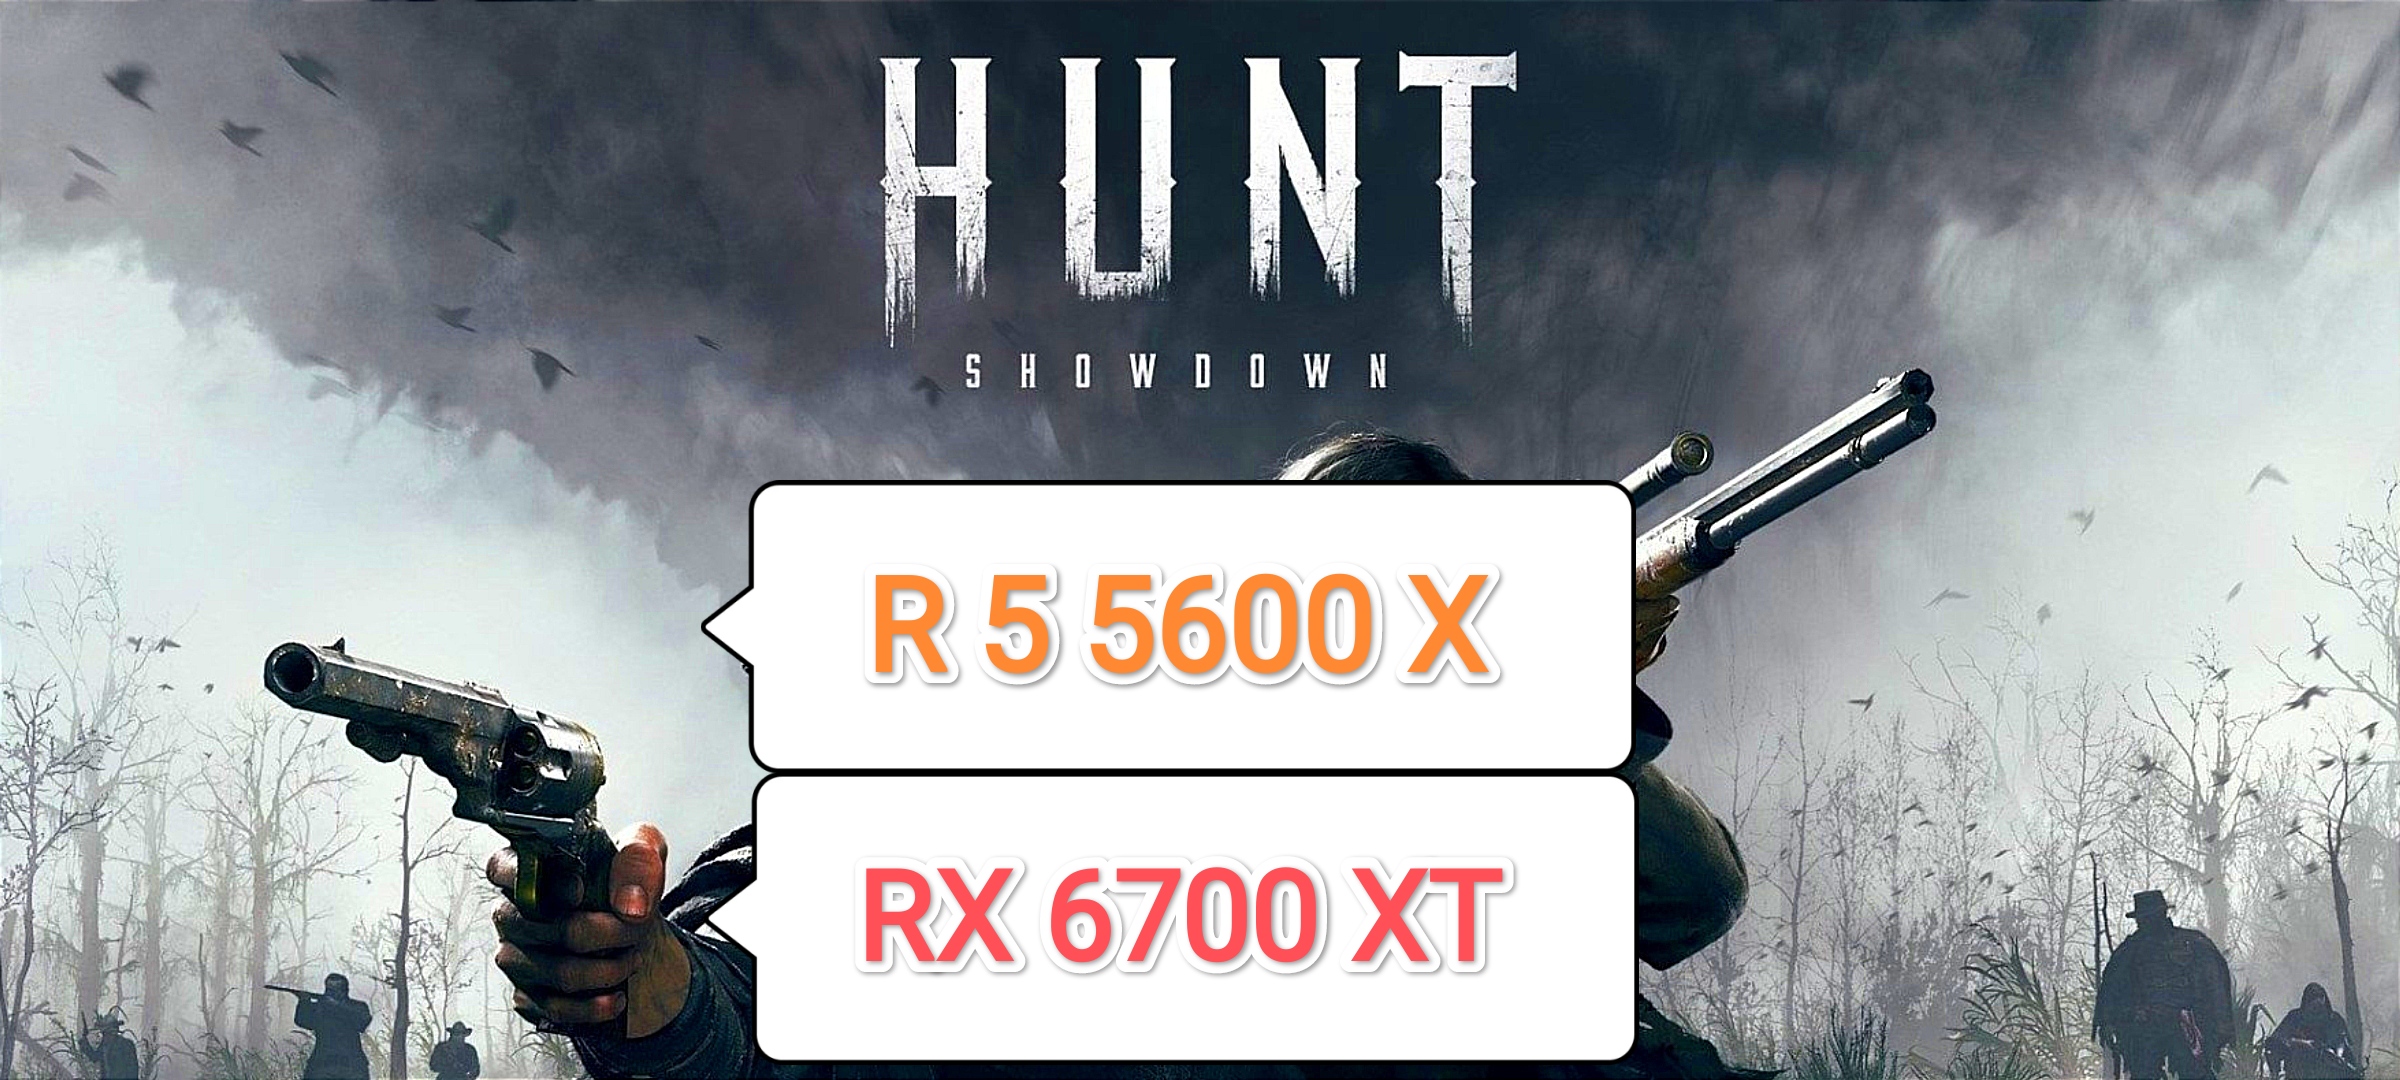 Hunt Showdown v.1.15 - тест игры на RX 6700 XT/R 5 5600 X